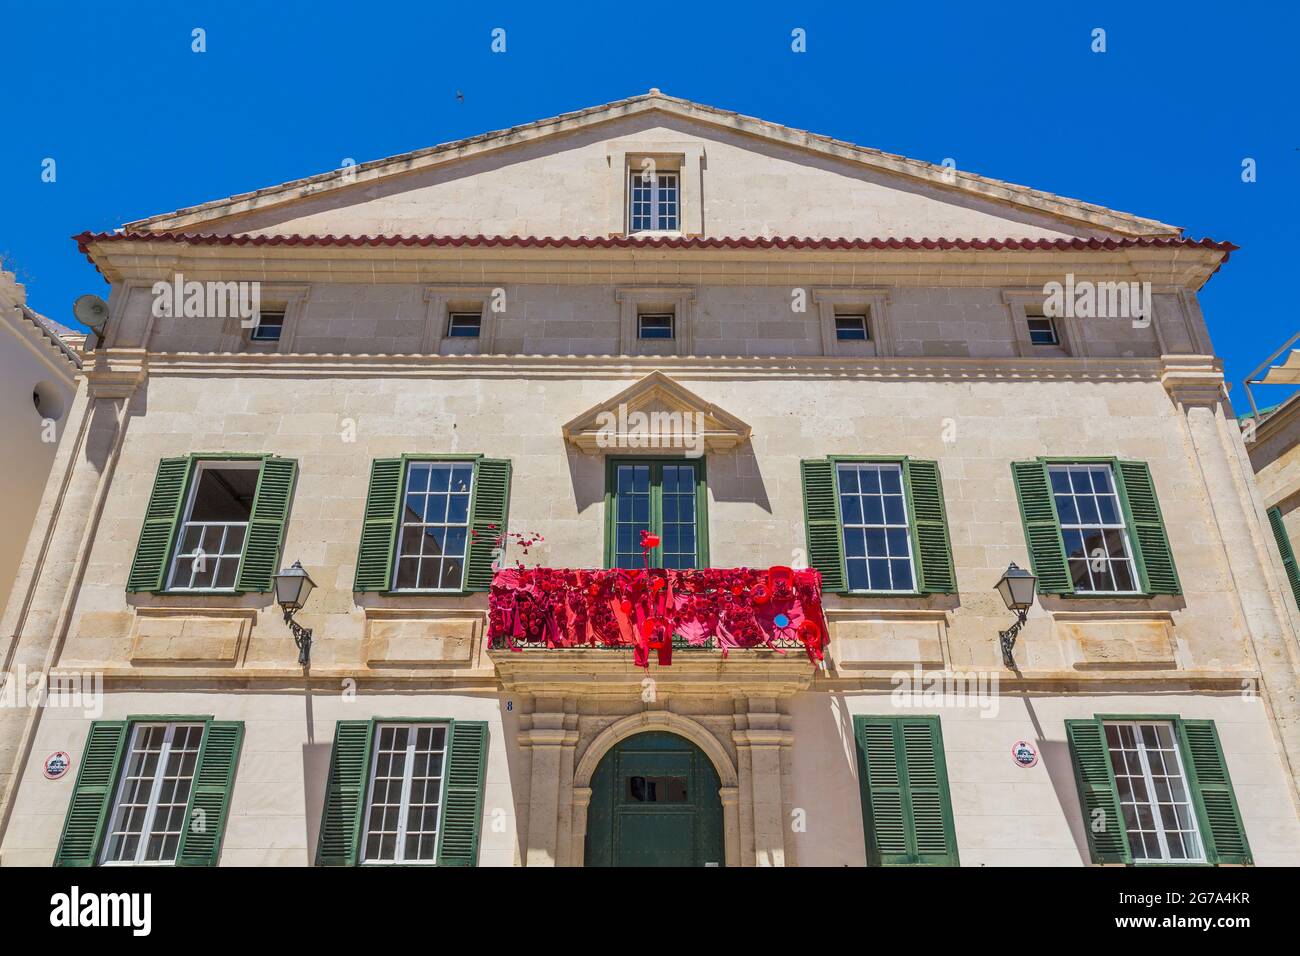 Red decorated balcony, Can Mercadal, municipal library, Biblioteca Central Insular, Placa de la Conquesta, Mahon, Mao, Menorca, Spain, Europe Stock Photo